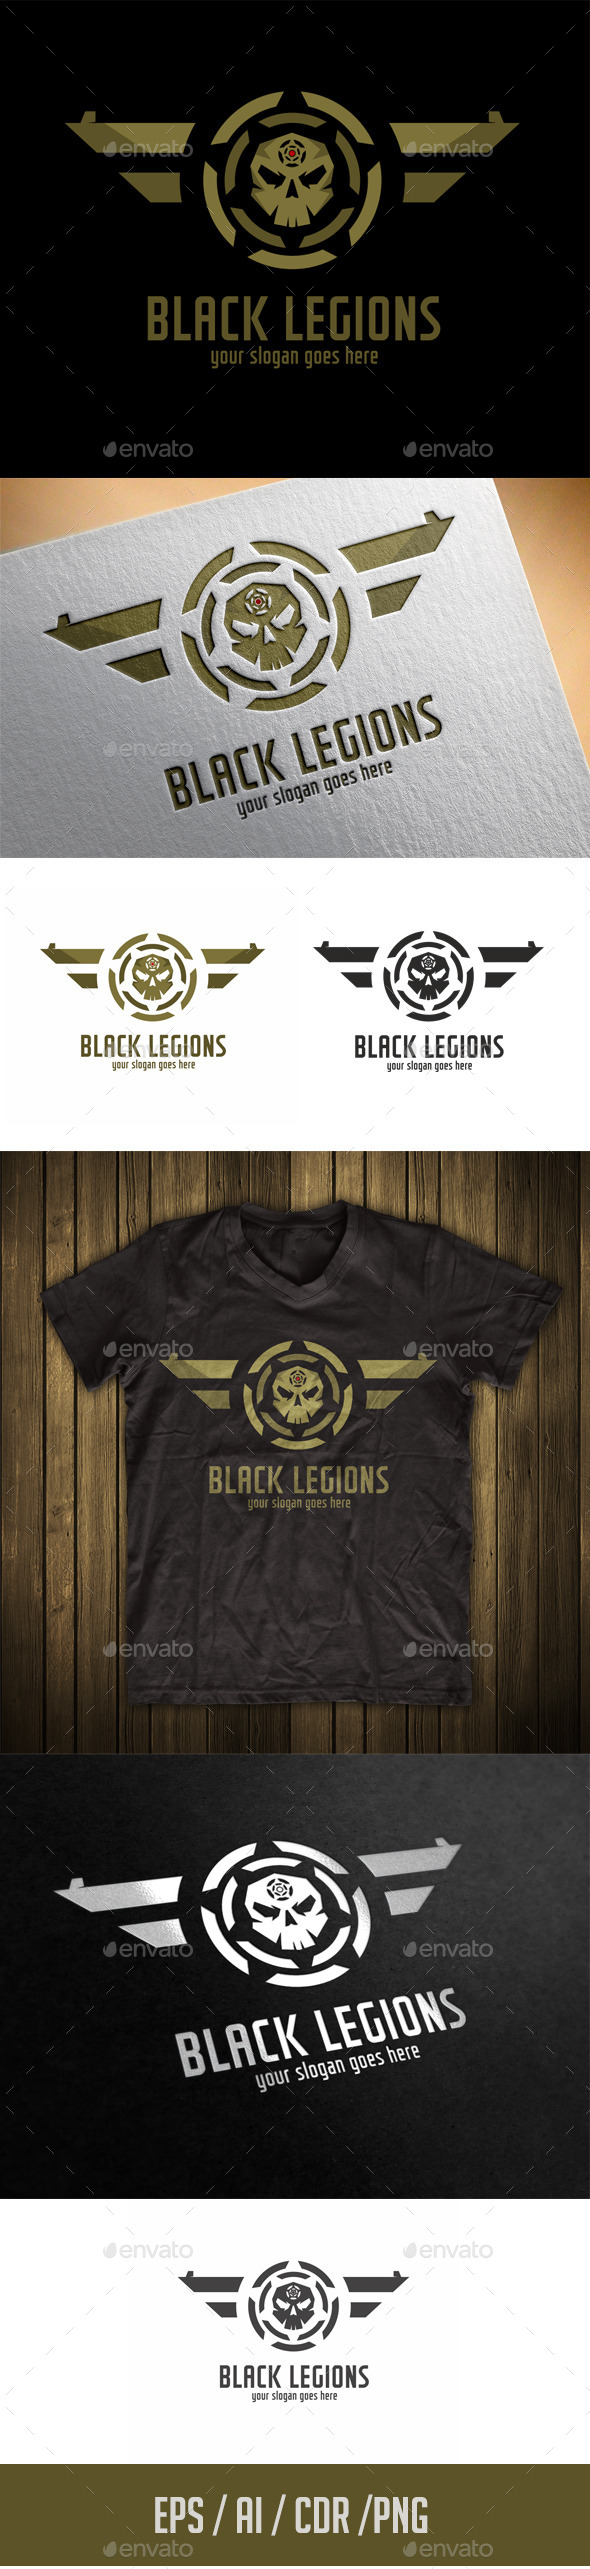 Black Legions Skull logo Template by ragerabbit | GraphicRiver